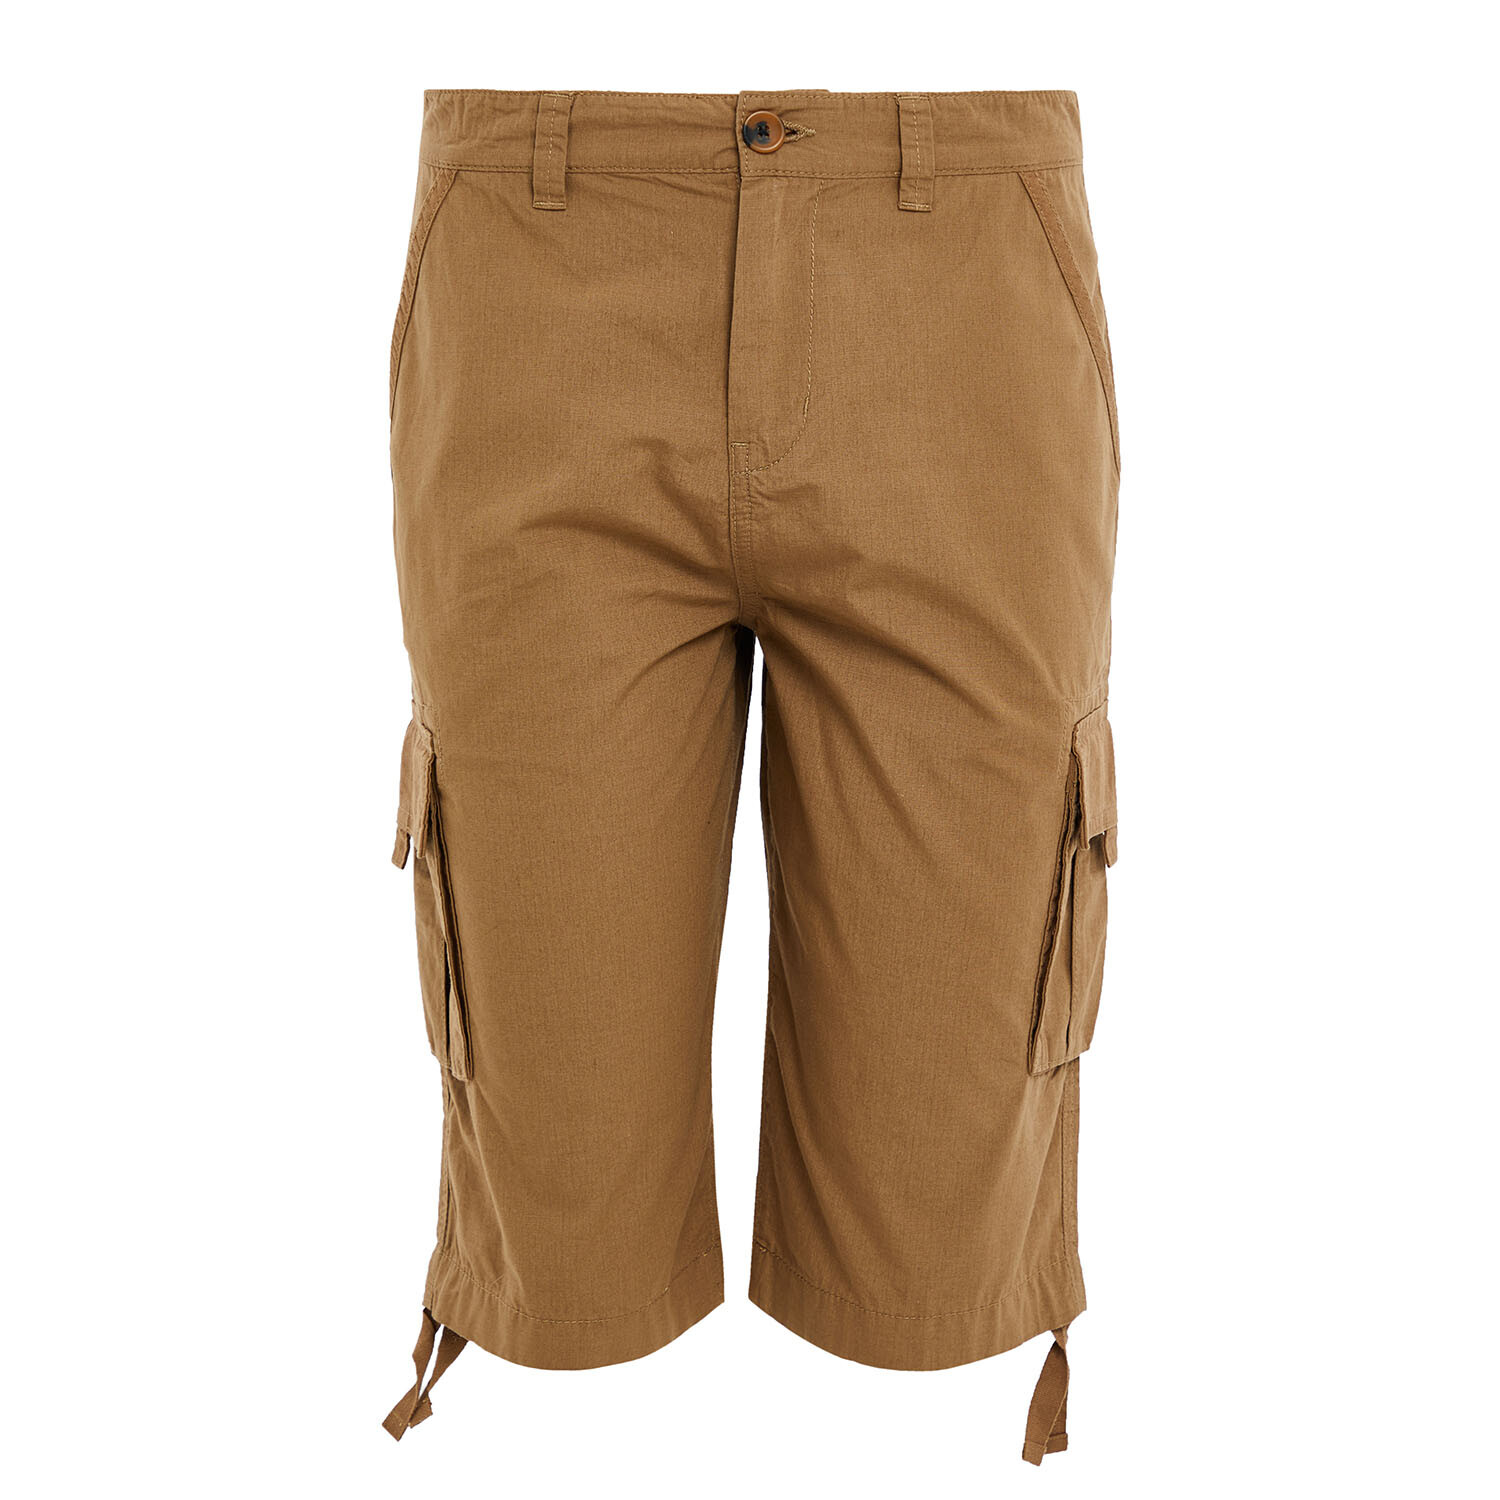 Men's 3/4 Length Shorts - Camel / XXL Image